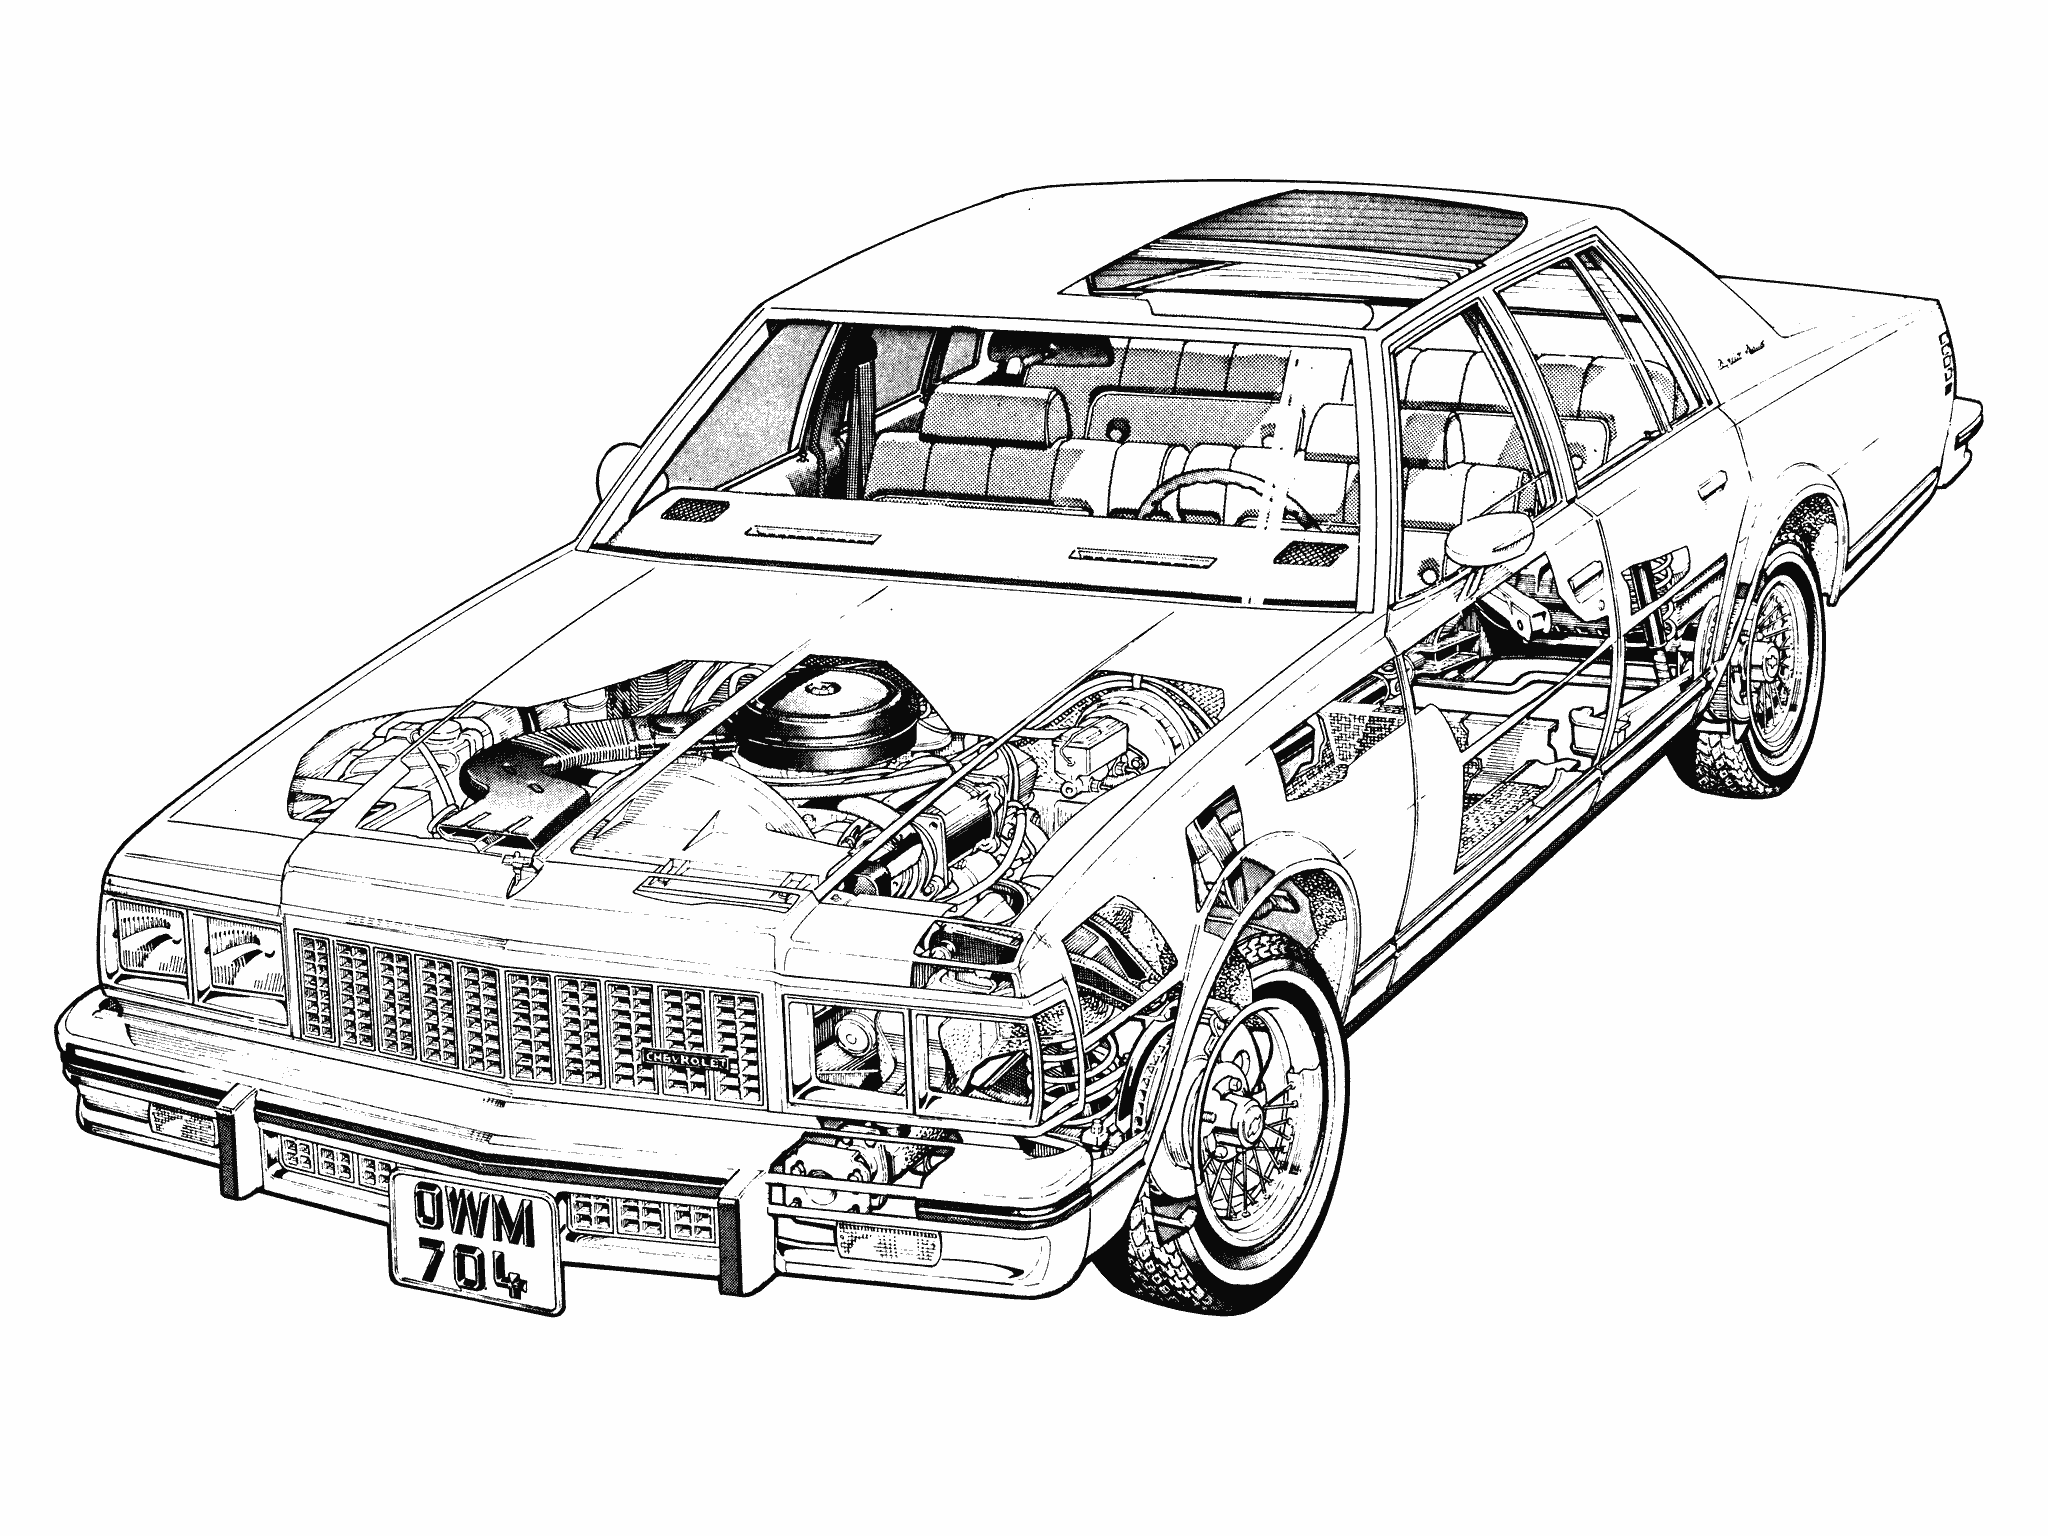 Chevrolet Caprice cutaway drawing